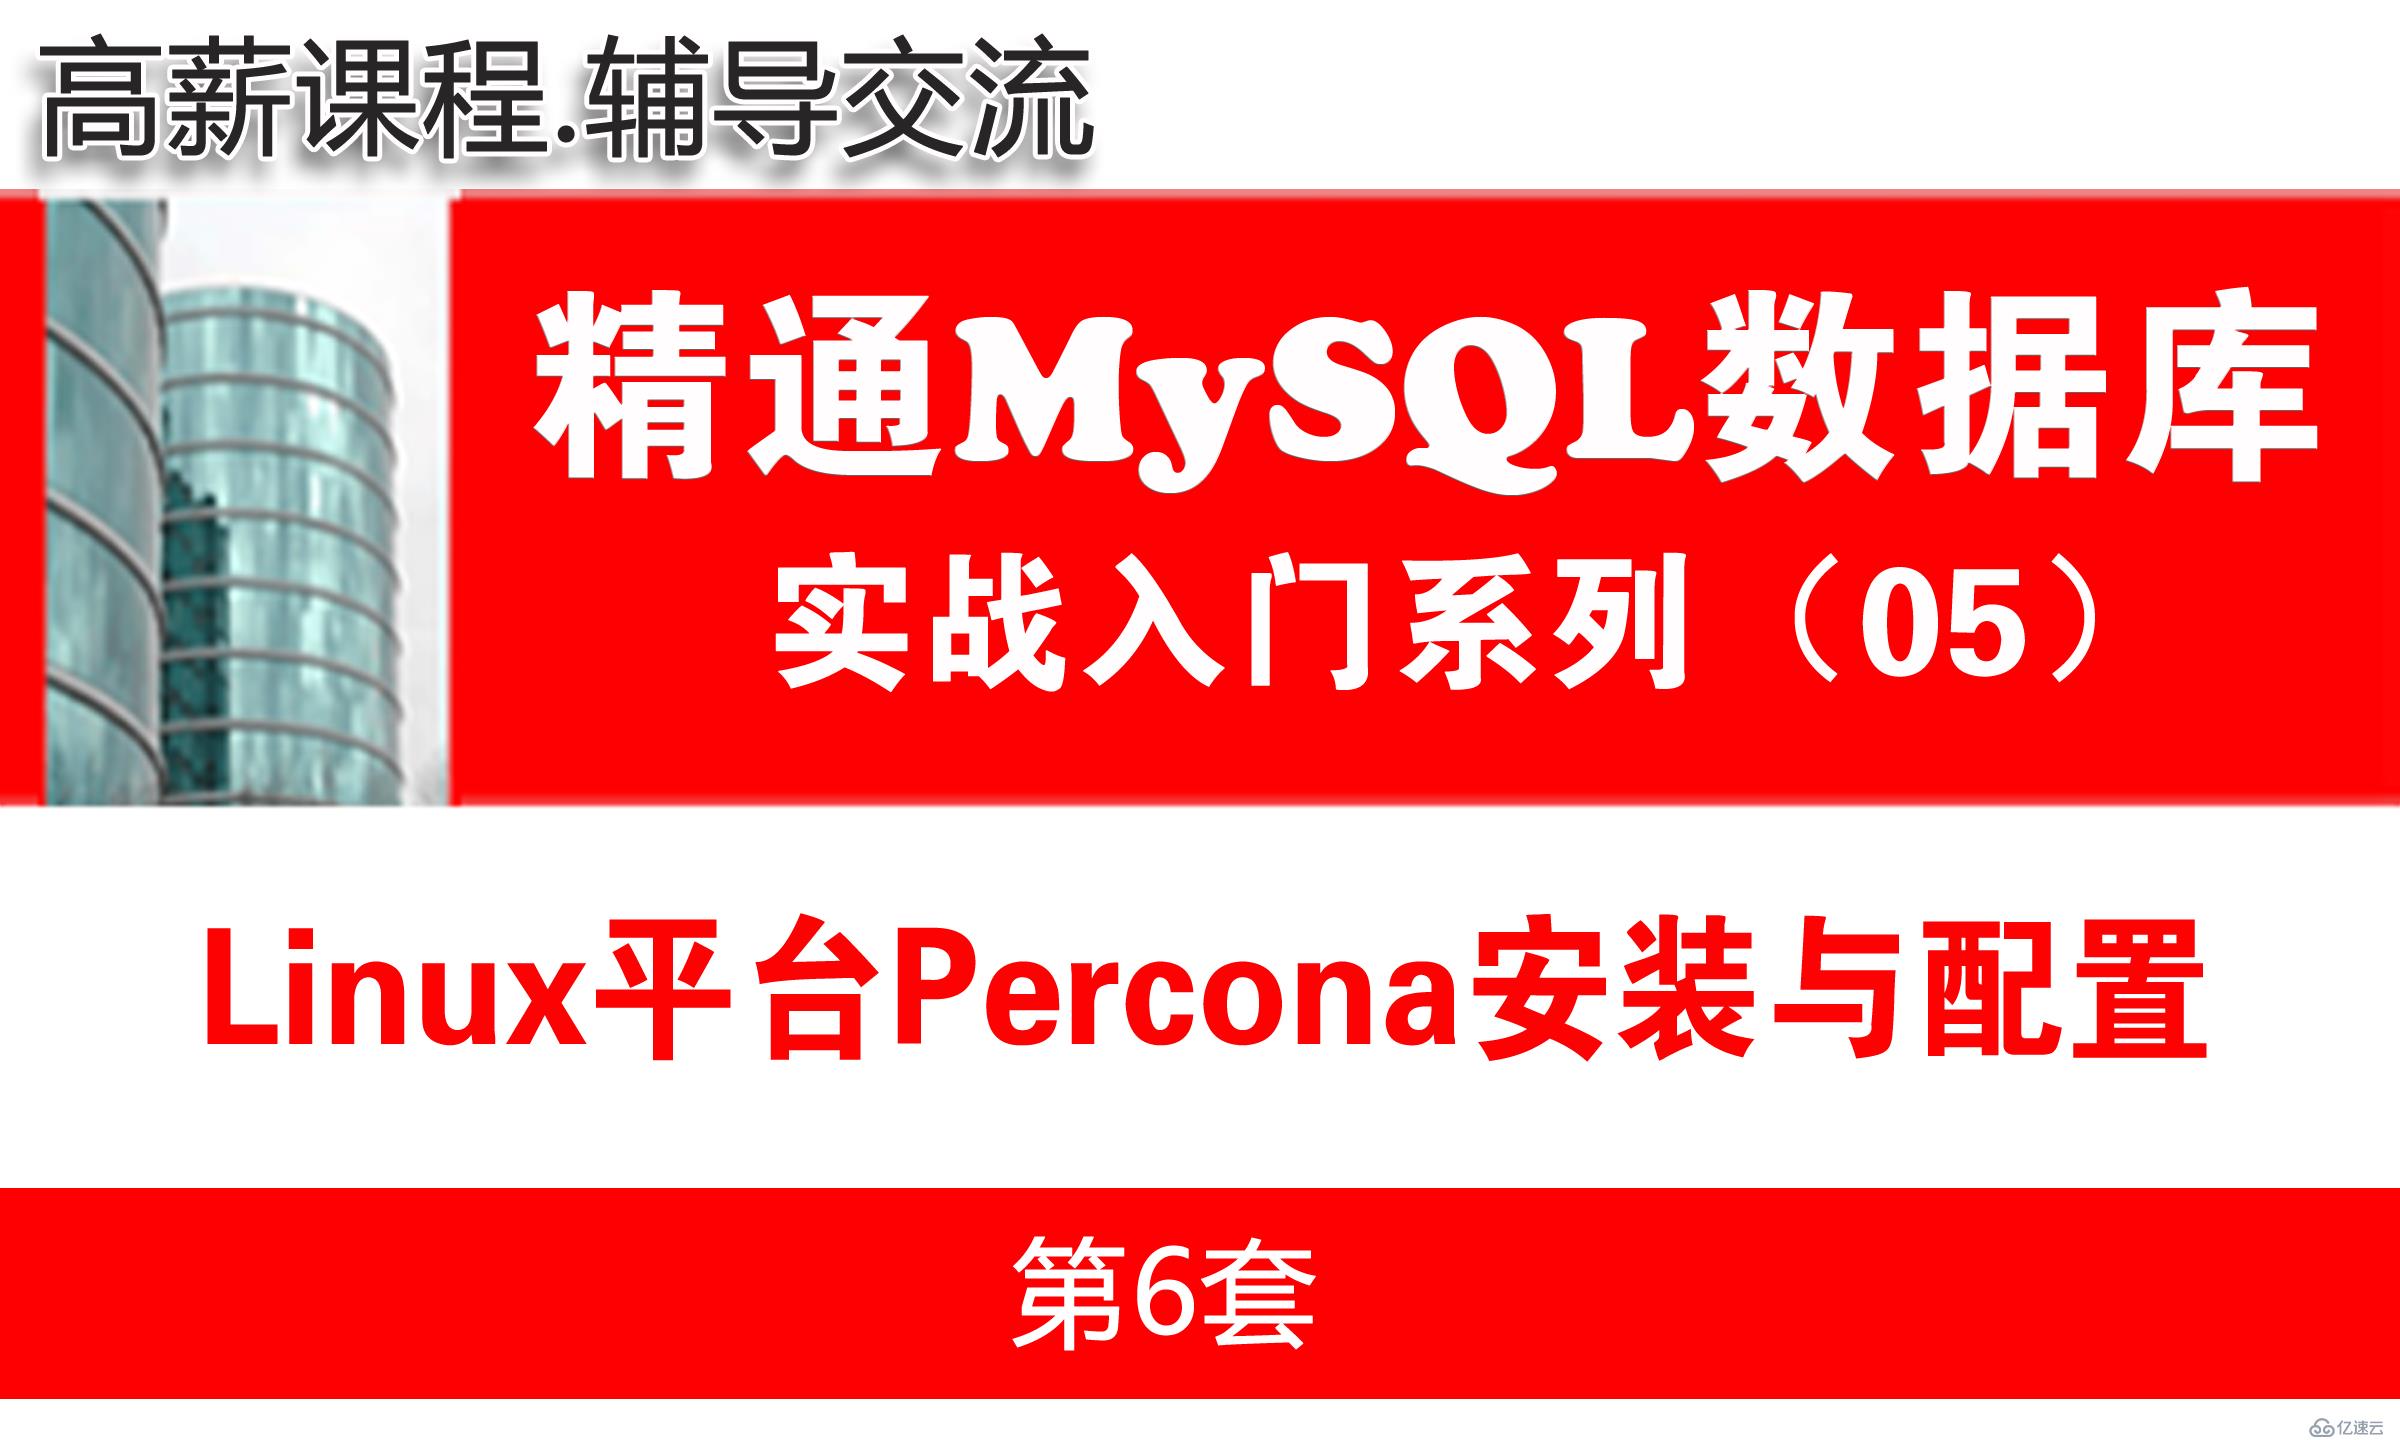 Linux平台Percona安装配置与管理入门_MySQL数据库基础与项目实战05